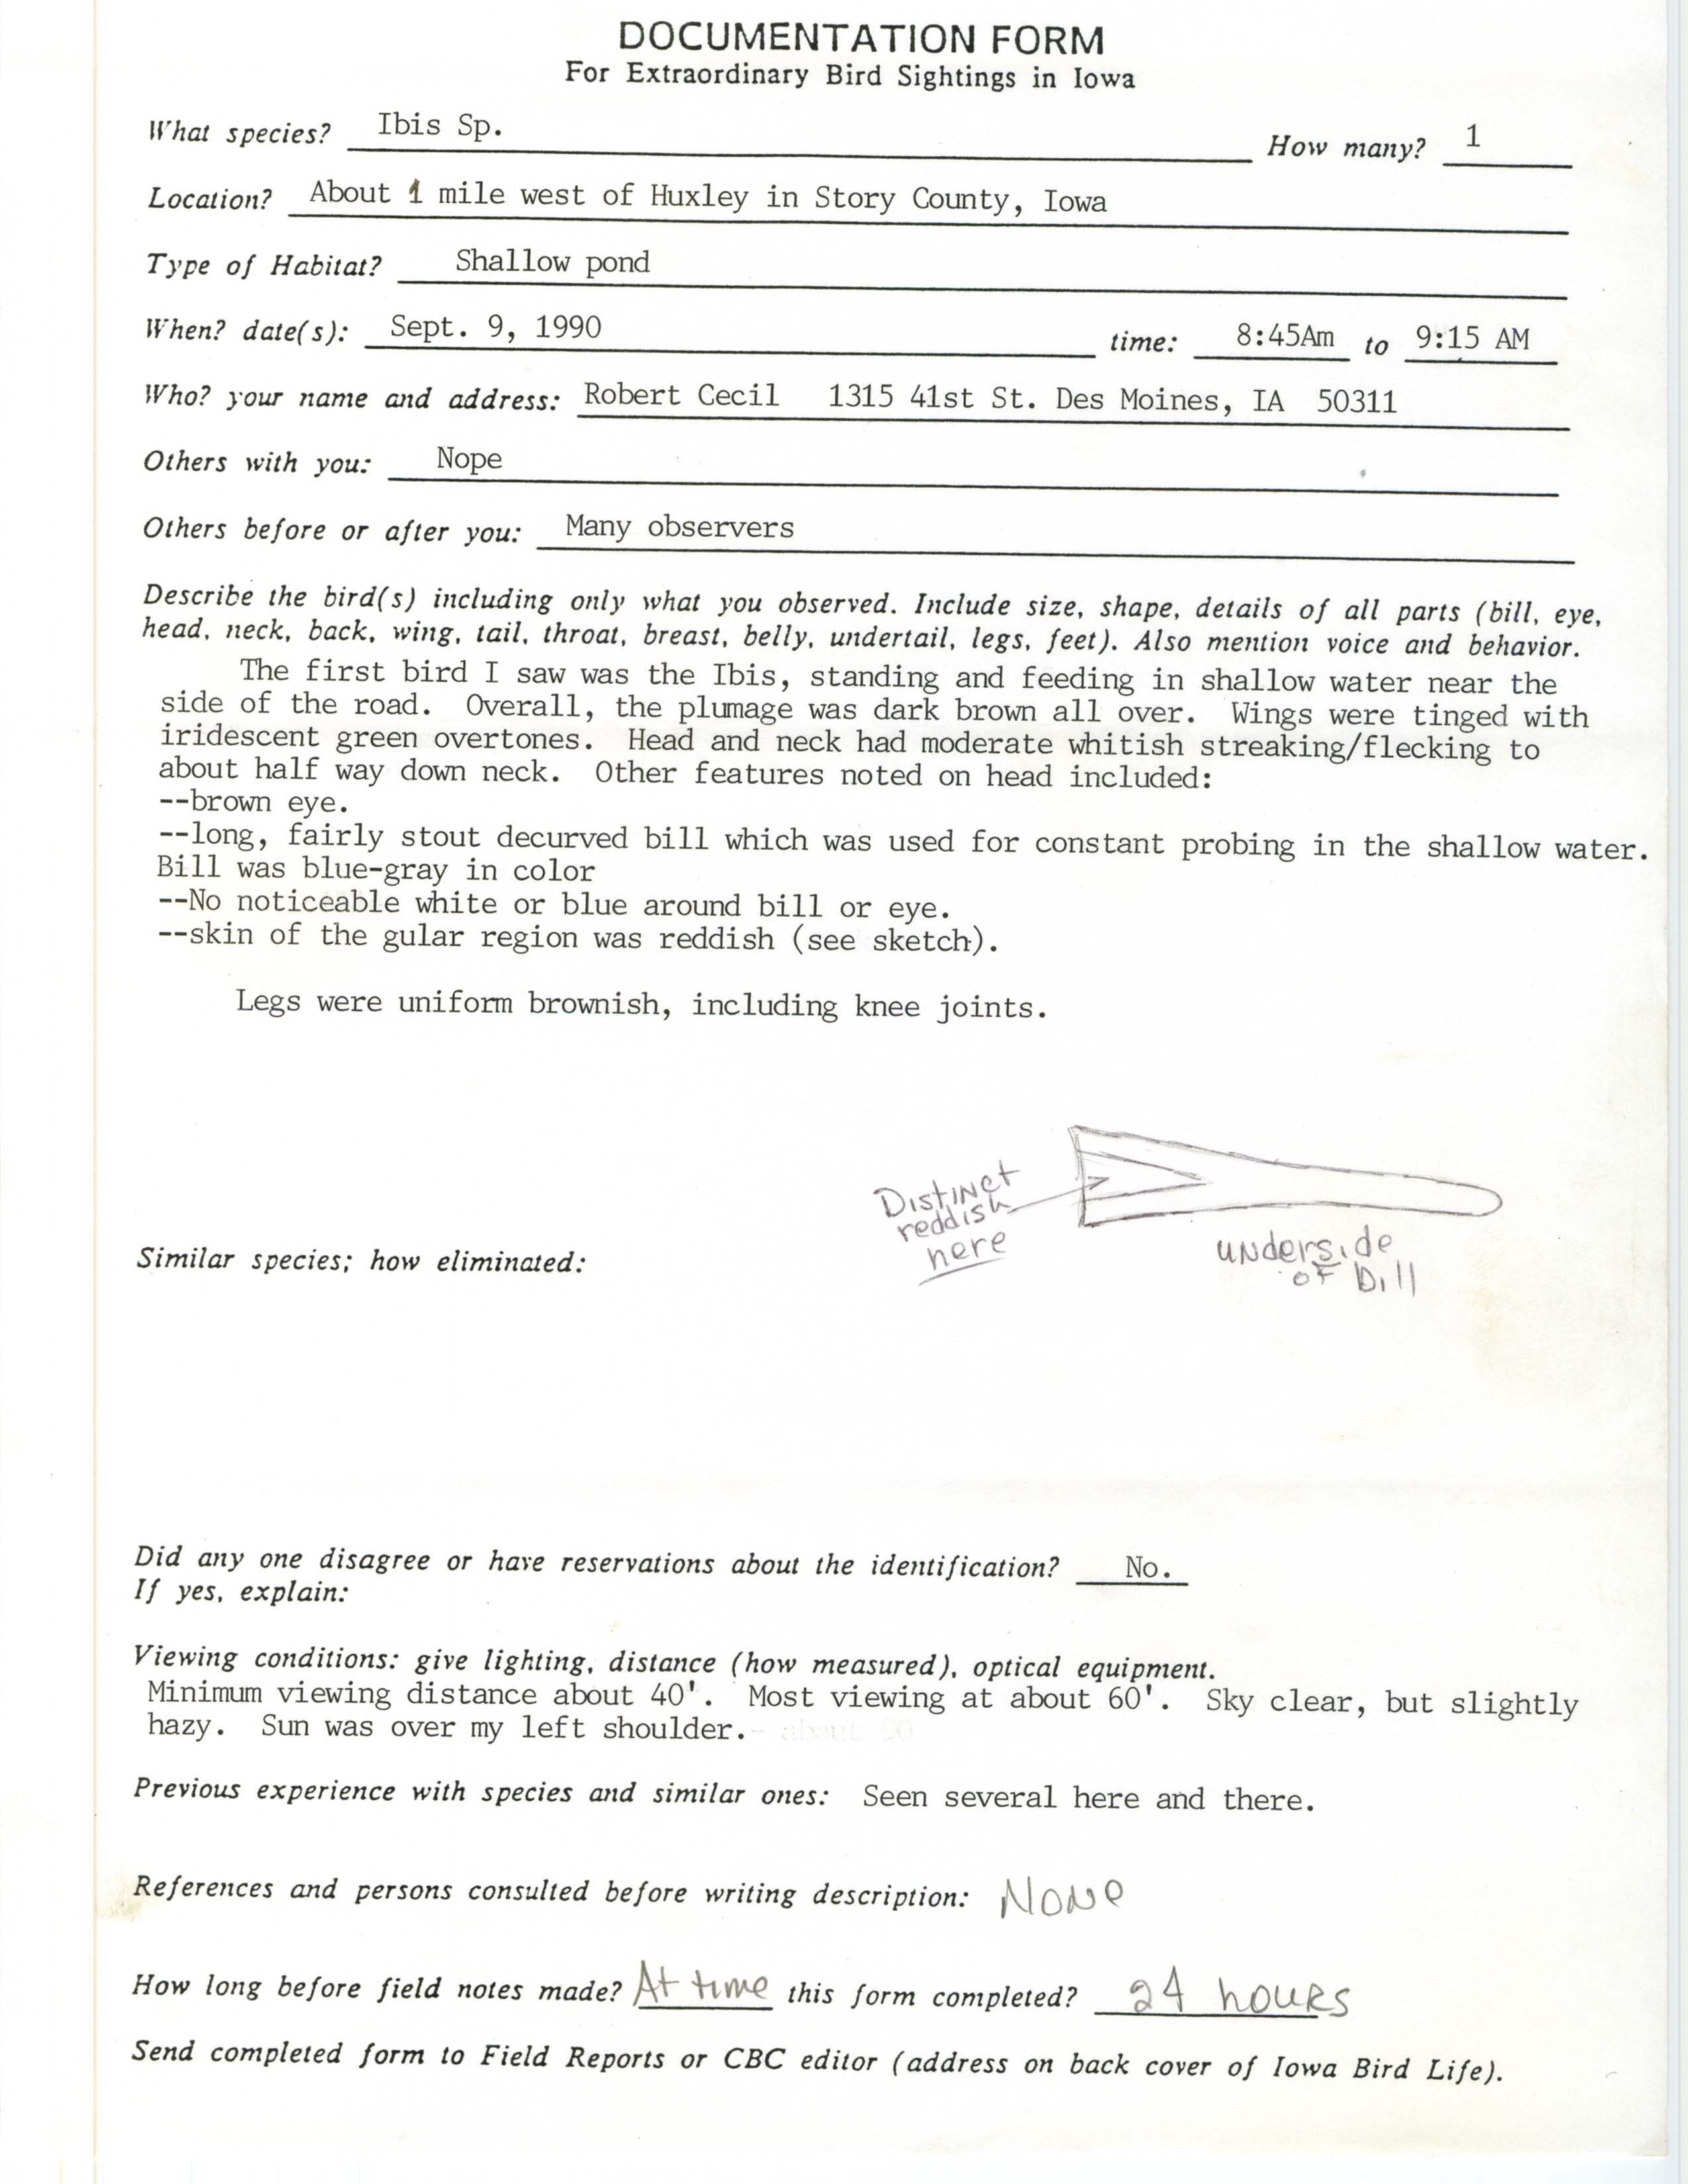 Rare bird documentation form for Ibis species at Huxley, 1990